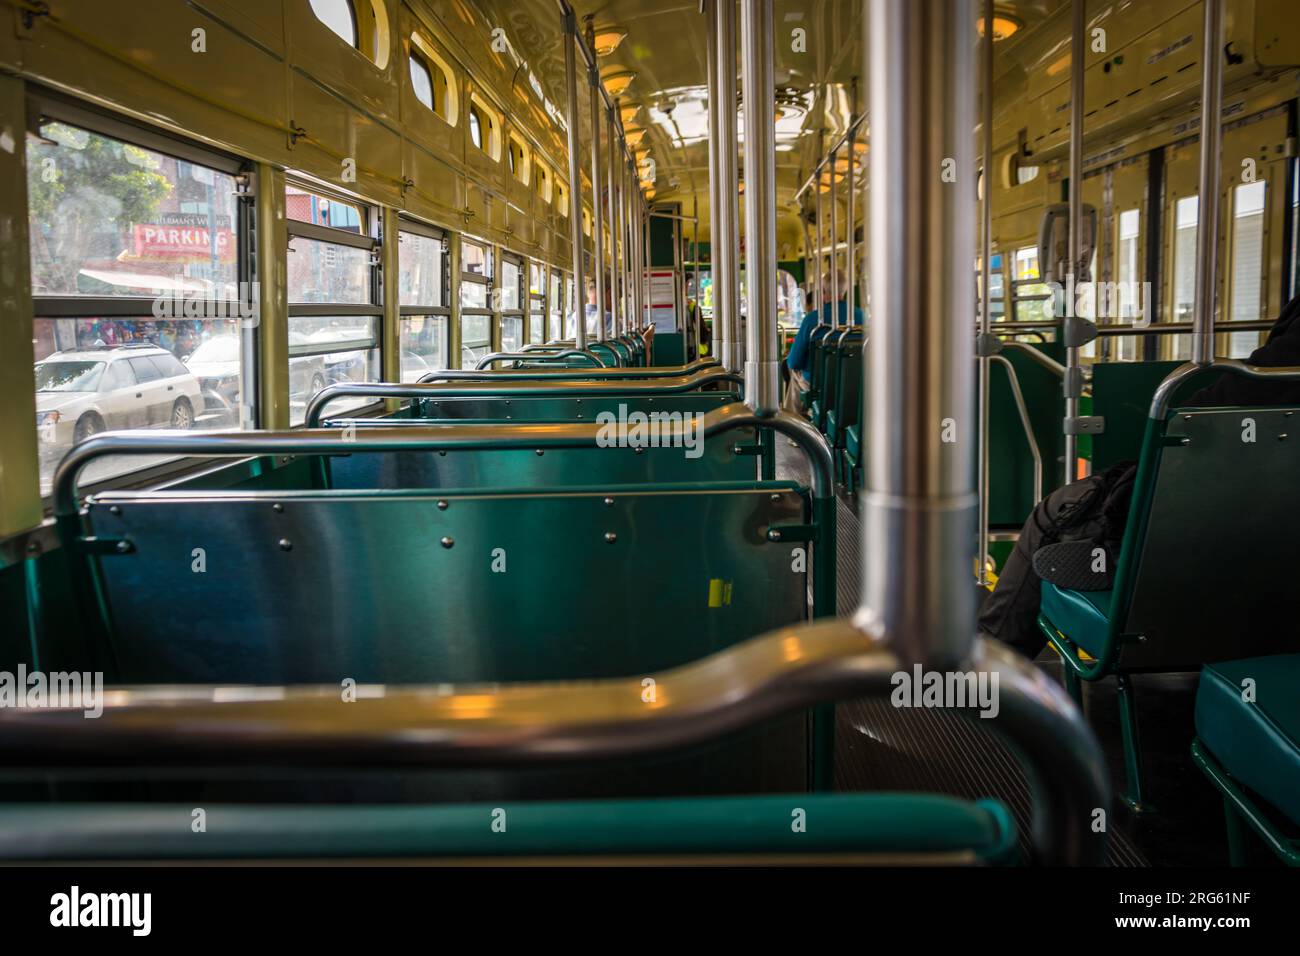 Historic heritage vintage streetcar tram interior with green seats in San Francisco, California Stock Photo